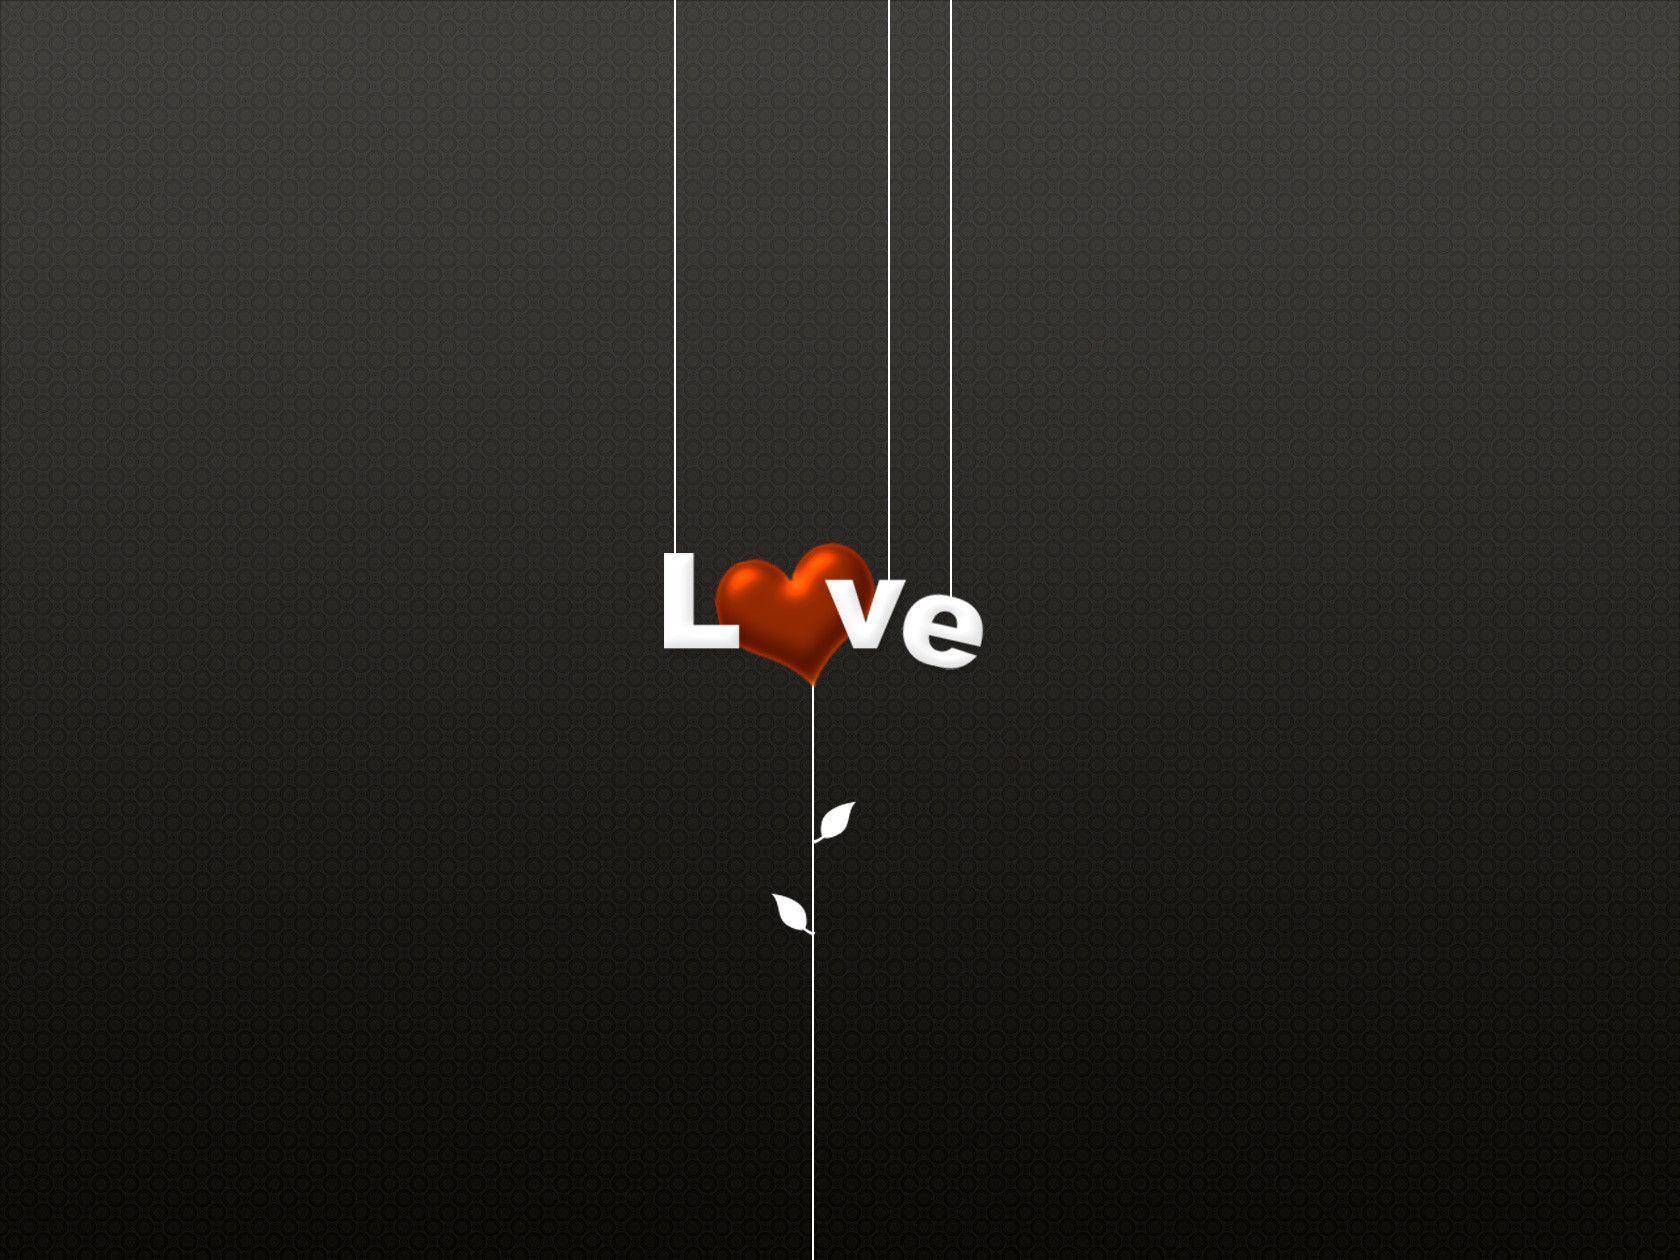 Love Desktop Background